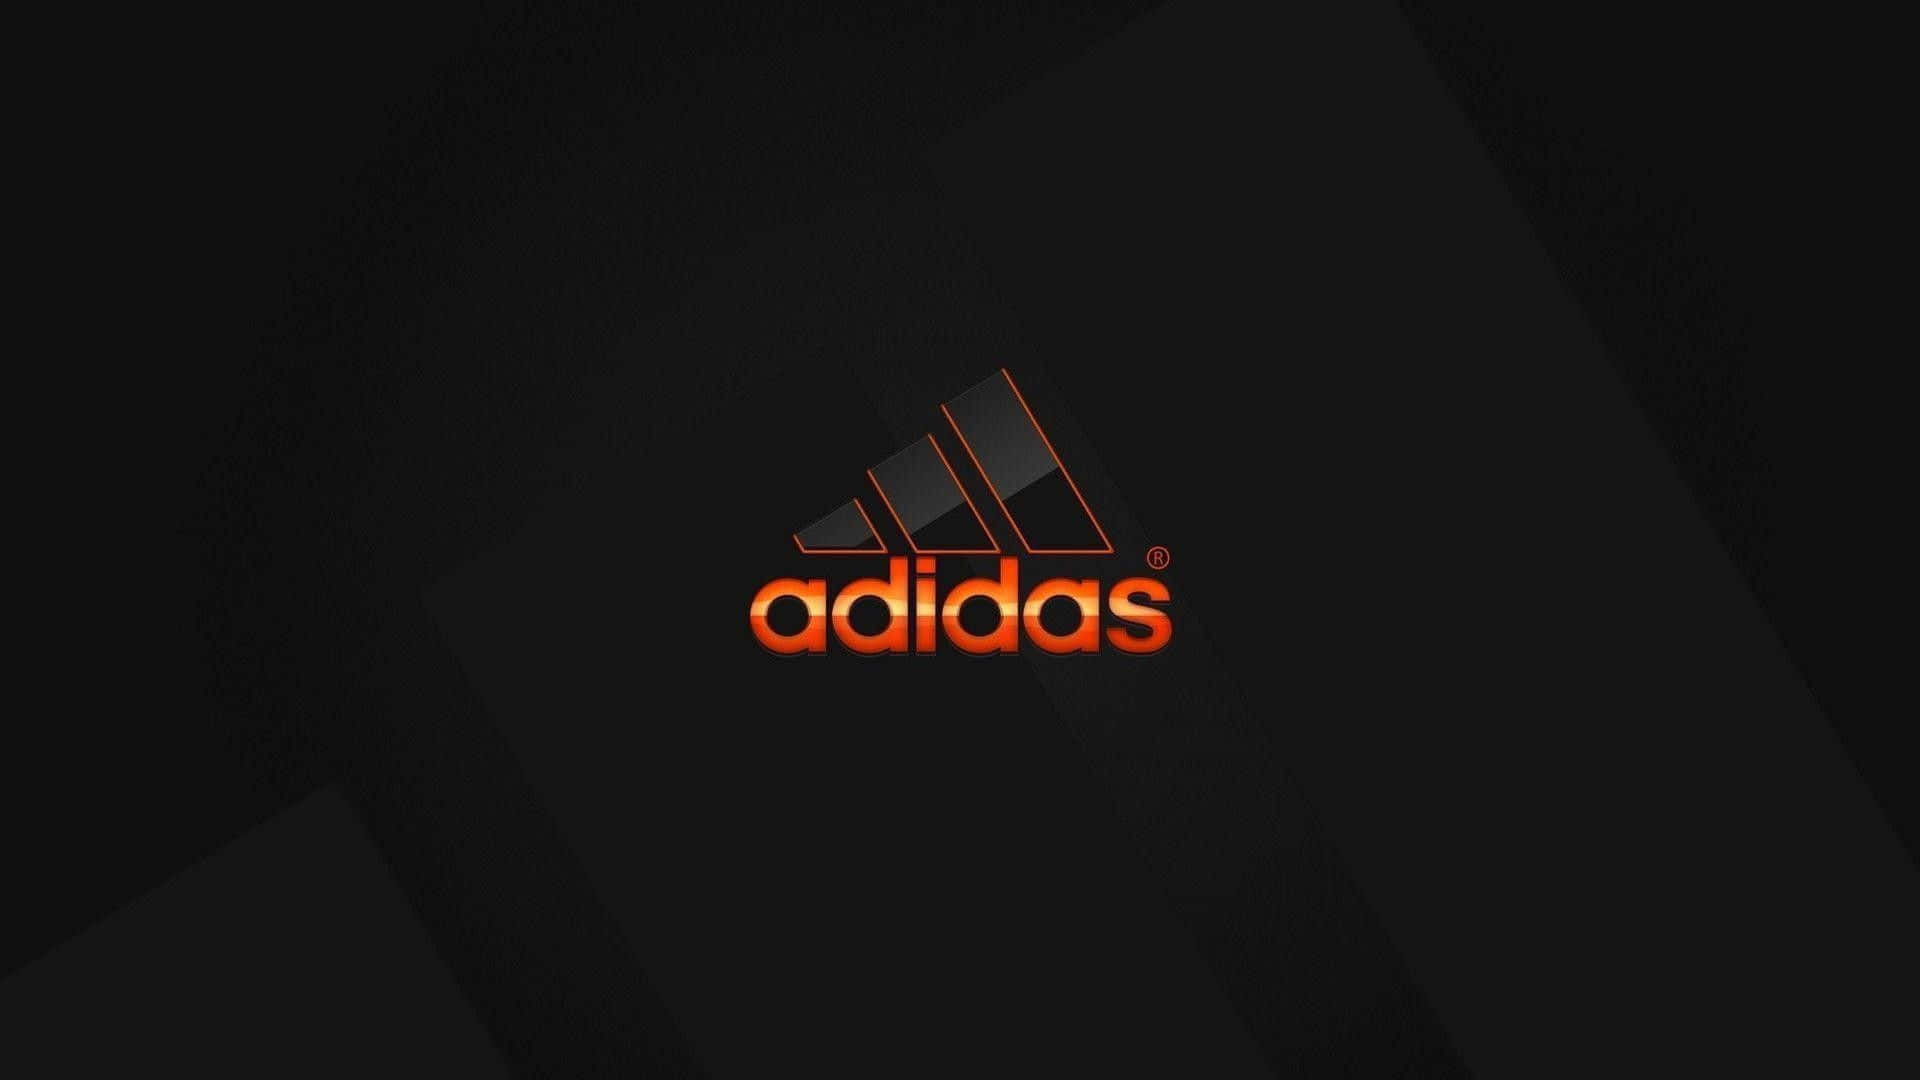 Adidas Logo On A Black Background